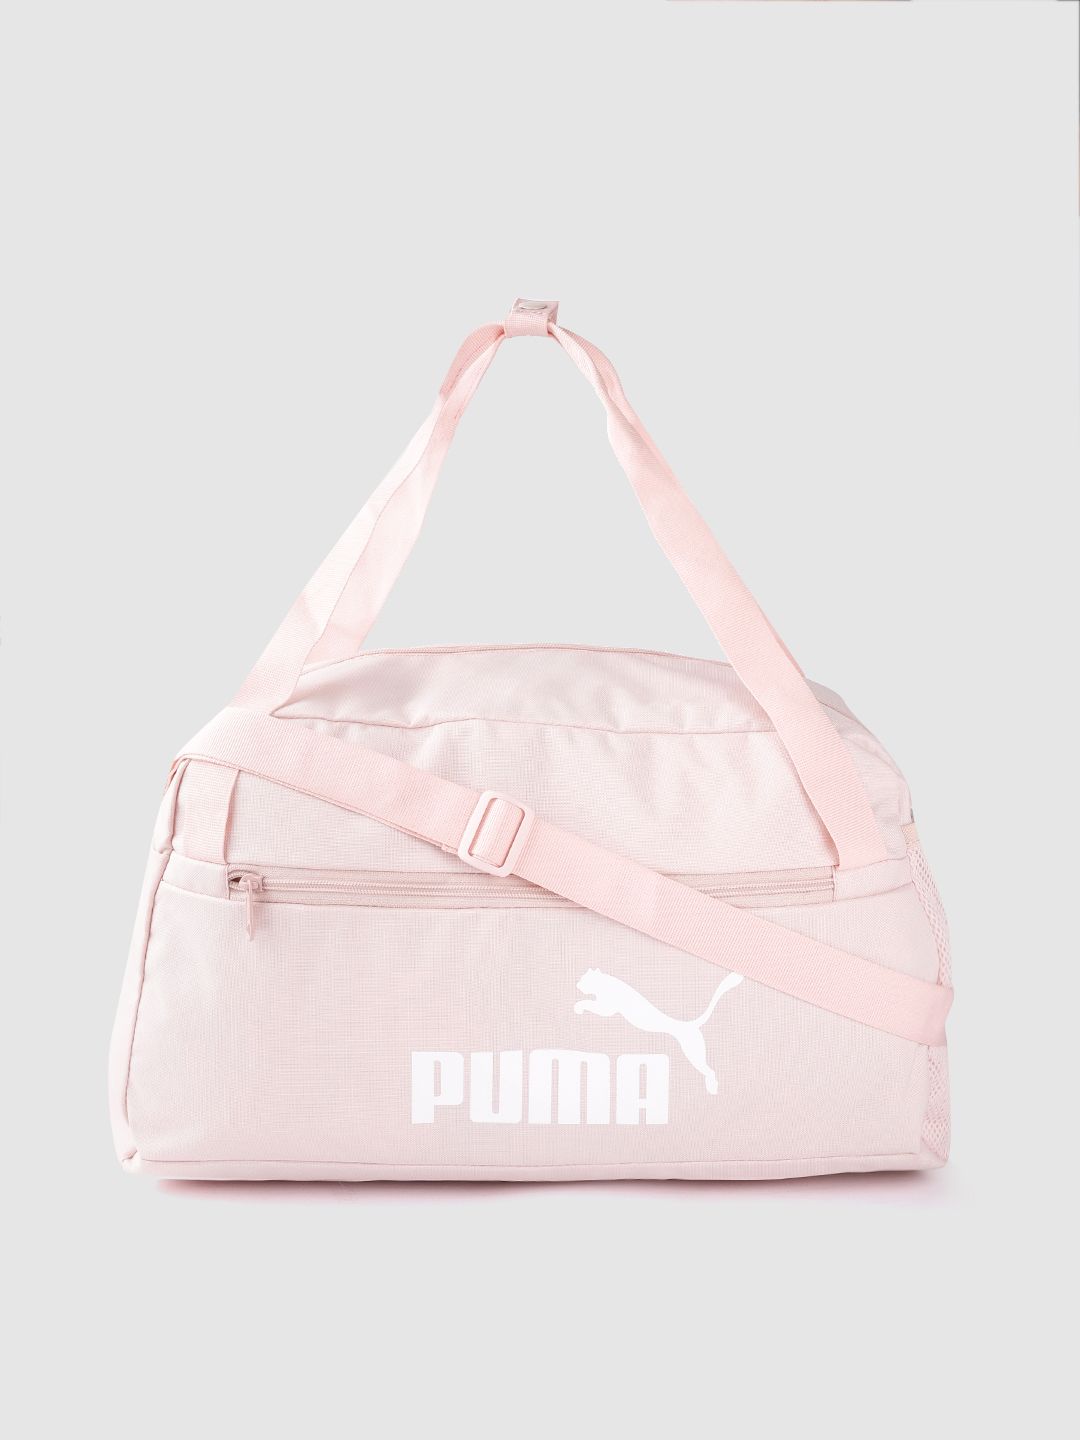 Puma Unisex Peach-Coloured & White Brand Logo Print Phase Sports Duffel Bag Price in India